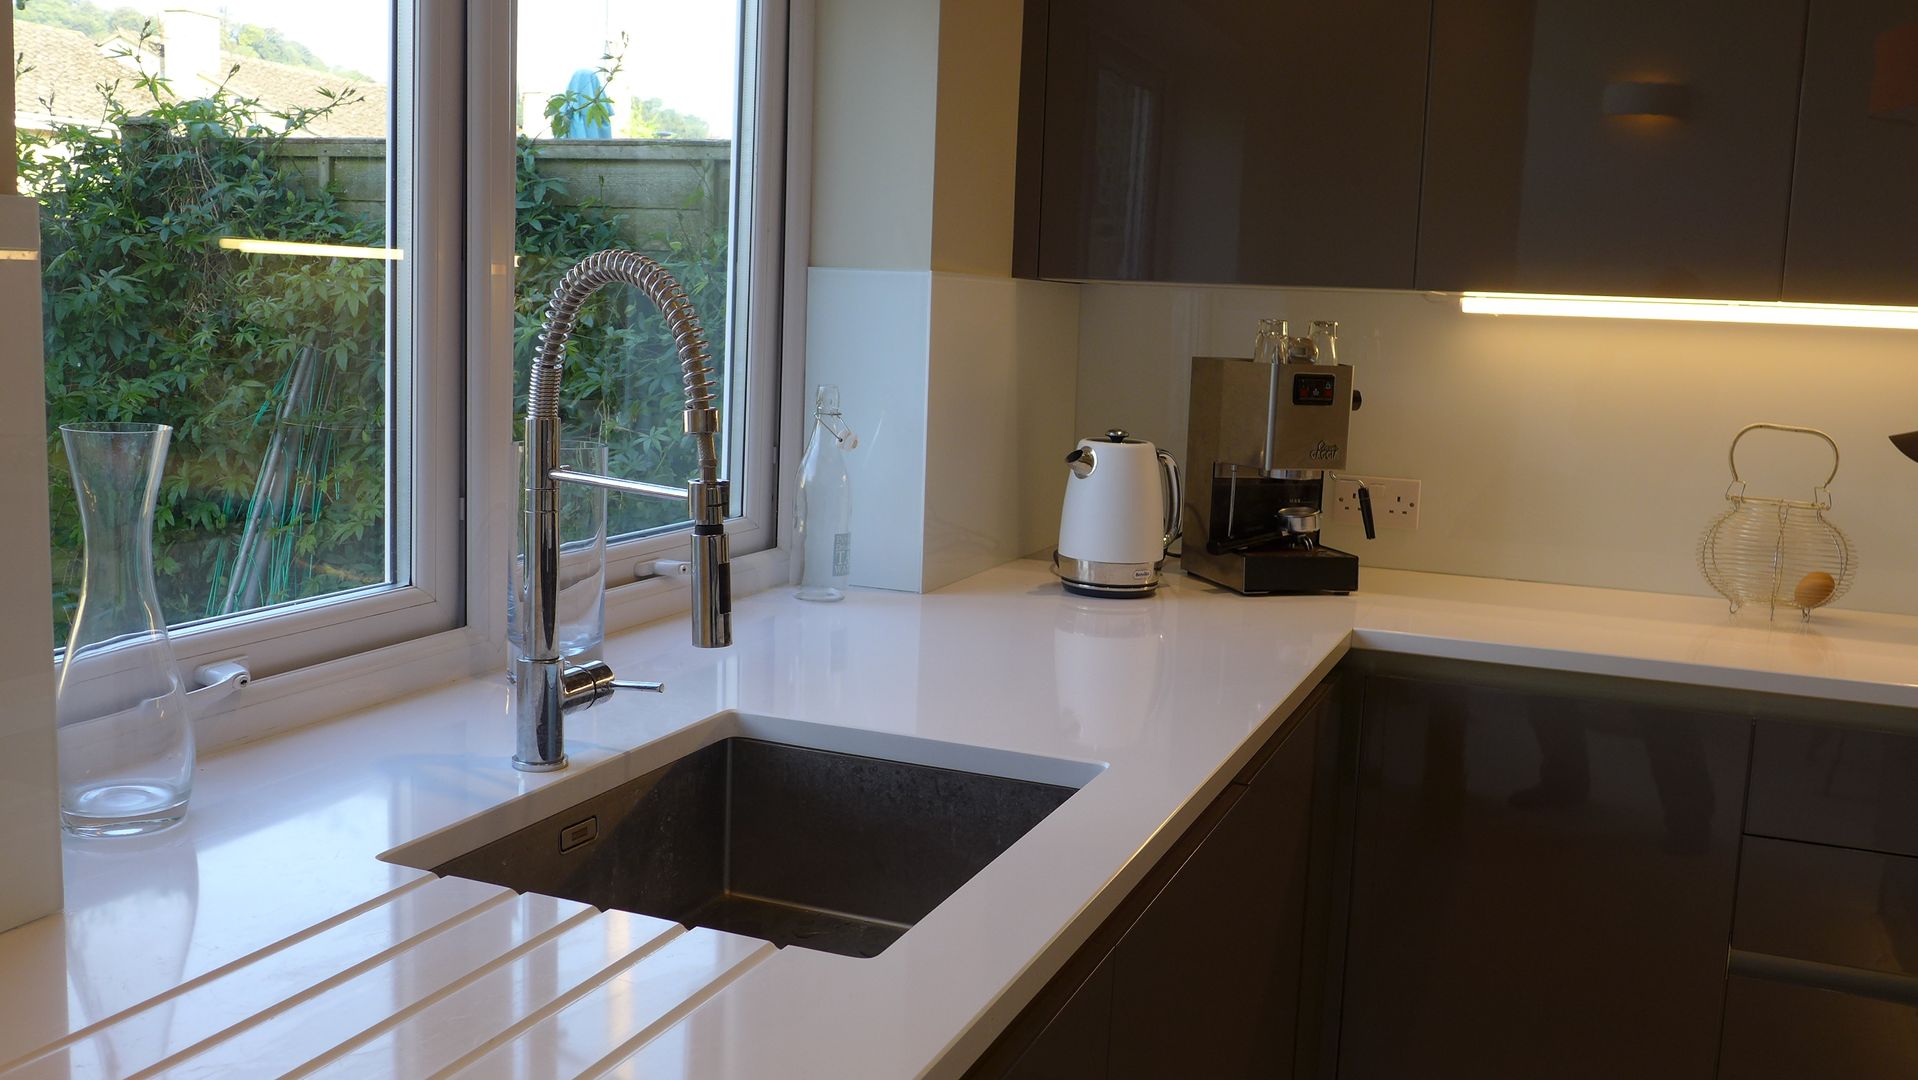 White quartz worktop with undermount sink Style Within Cocinas modernas kitchen tap,undermount sink,quartz worktop,white worktop,grey kitchen,swan neck tap,flexible tap,pelmet light